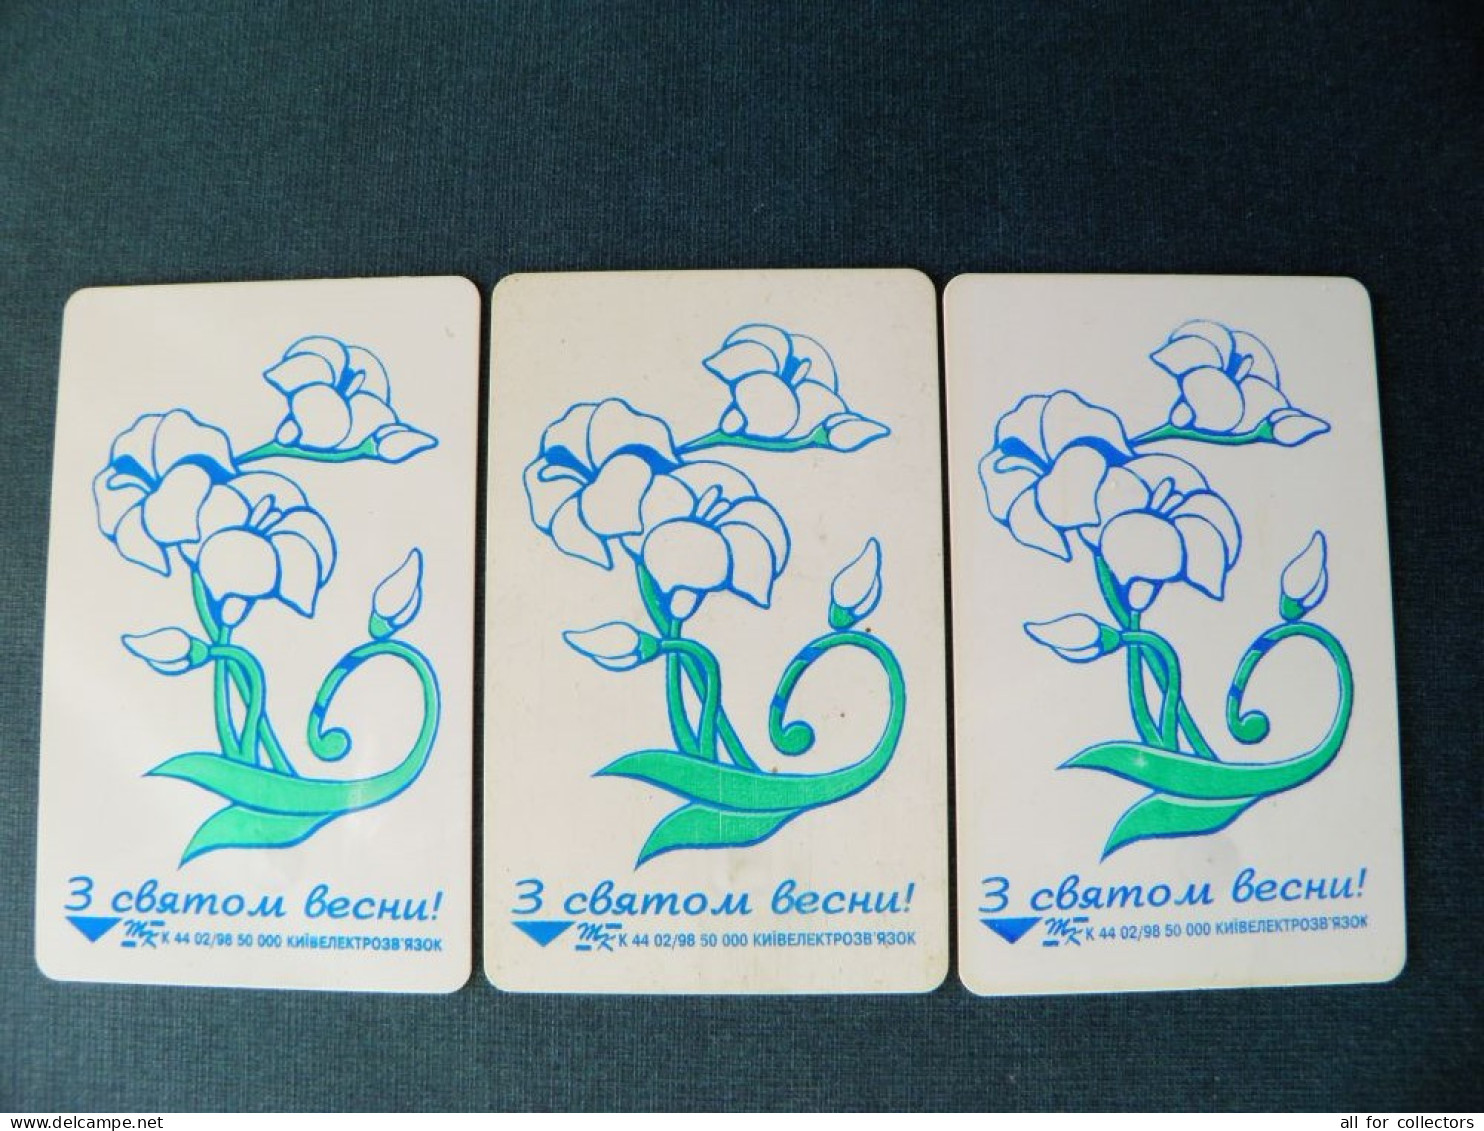 3 Different Cards Phonecard Chip Flowers Spring  K44 02/98 30,000ex. 1680 Units Prefix Nr. BV EZh GD UKRAINE - Ucraina